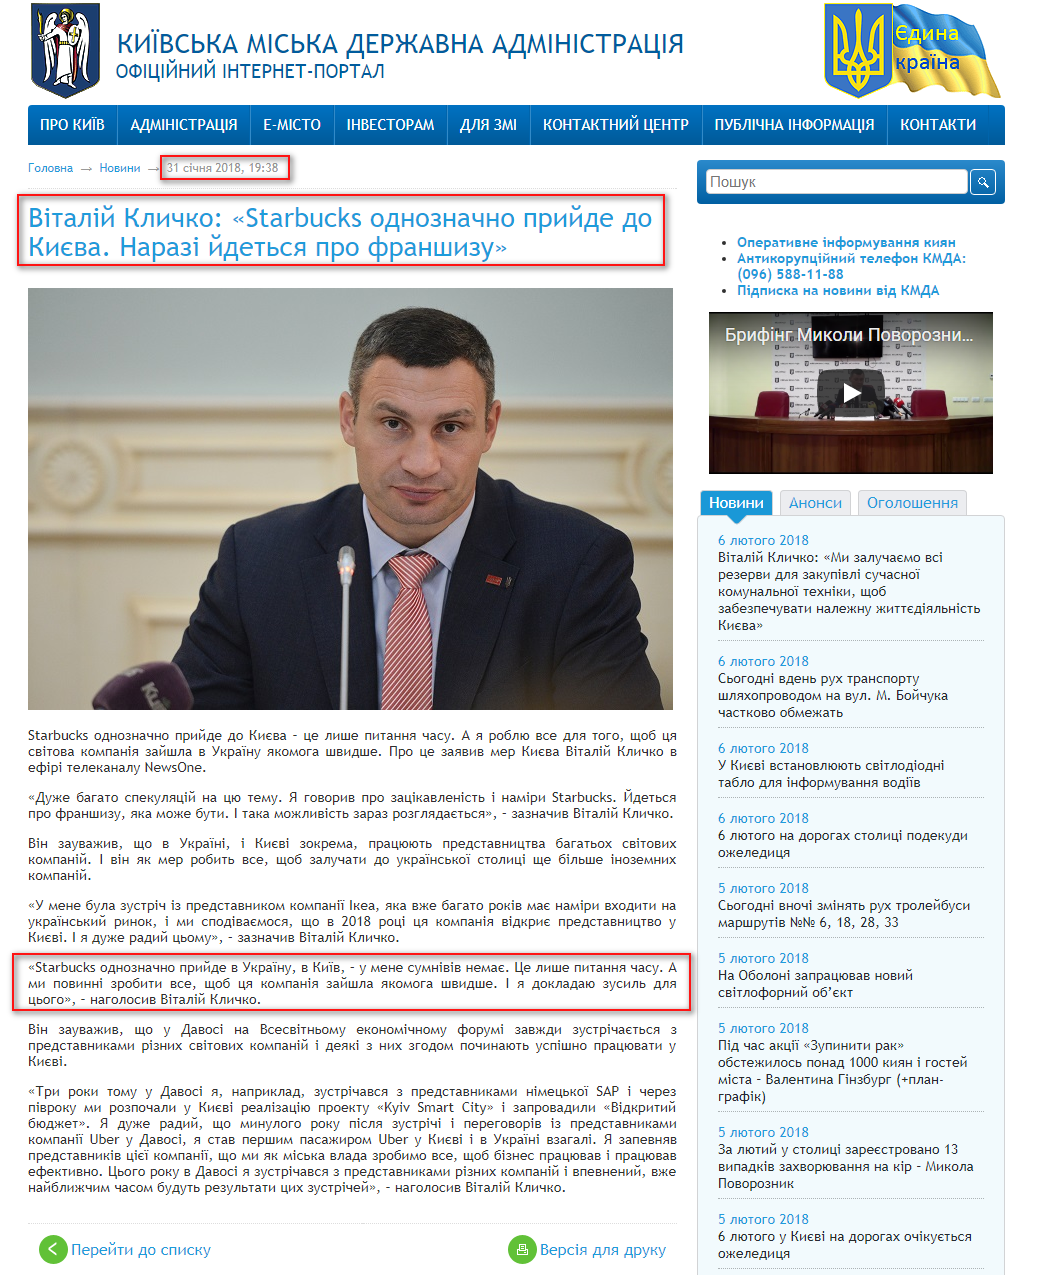 https://kyivcity.gov.ua/news/58523.html